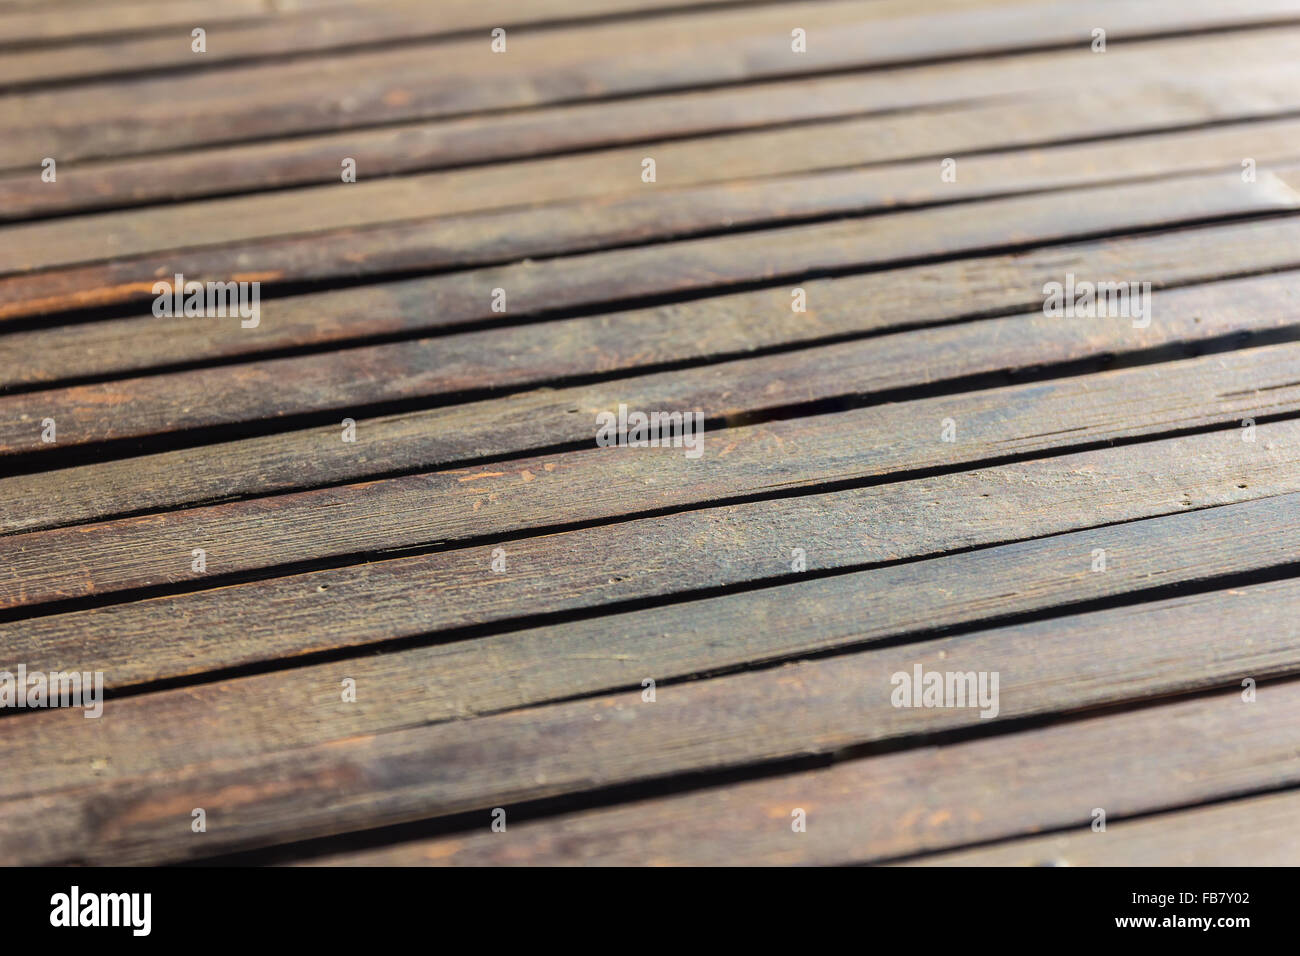 perspective wooden floor ,image in soft focusing Stock Photo